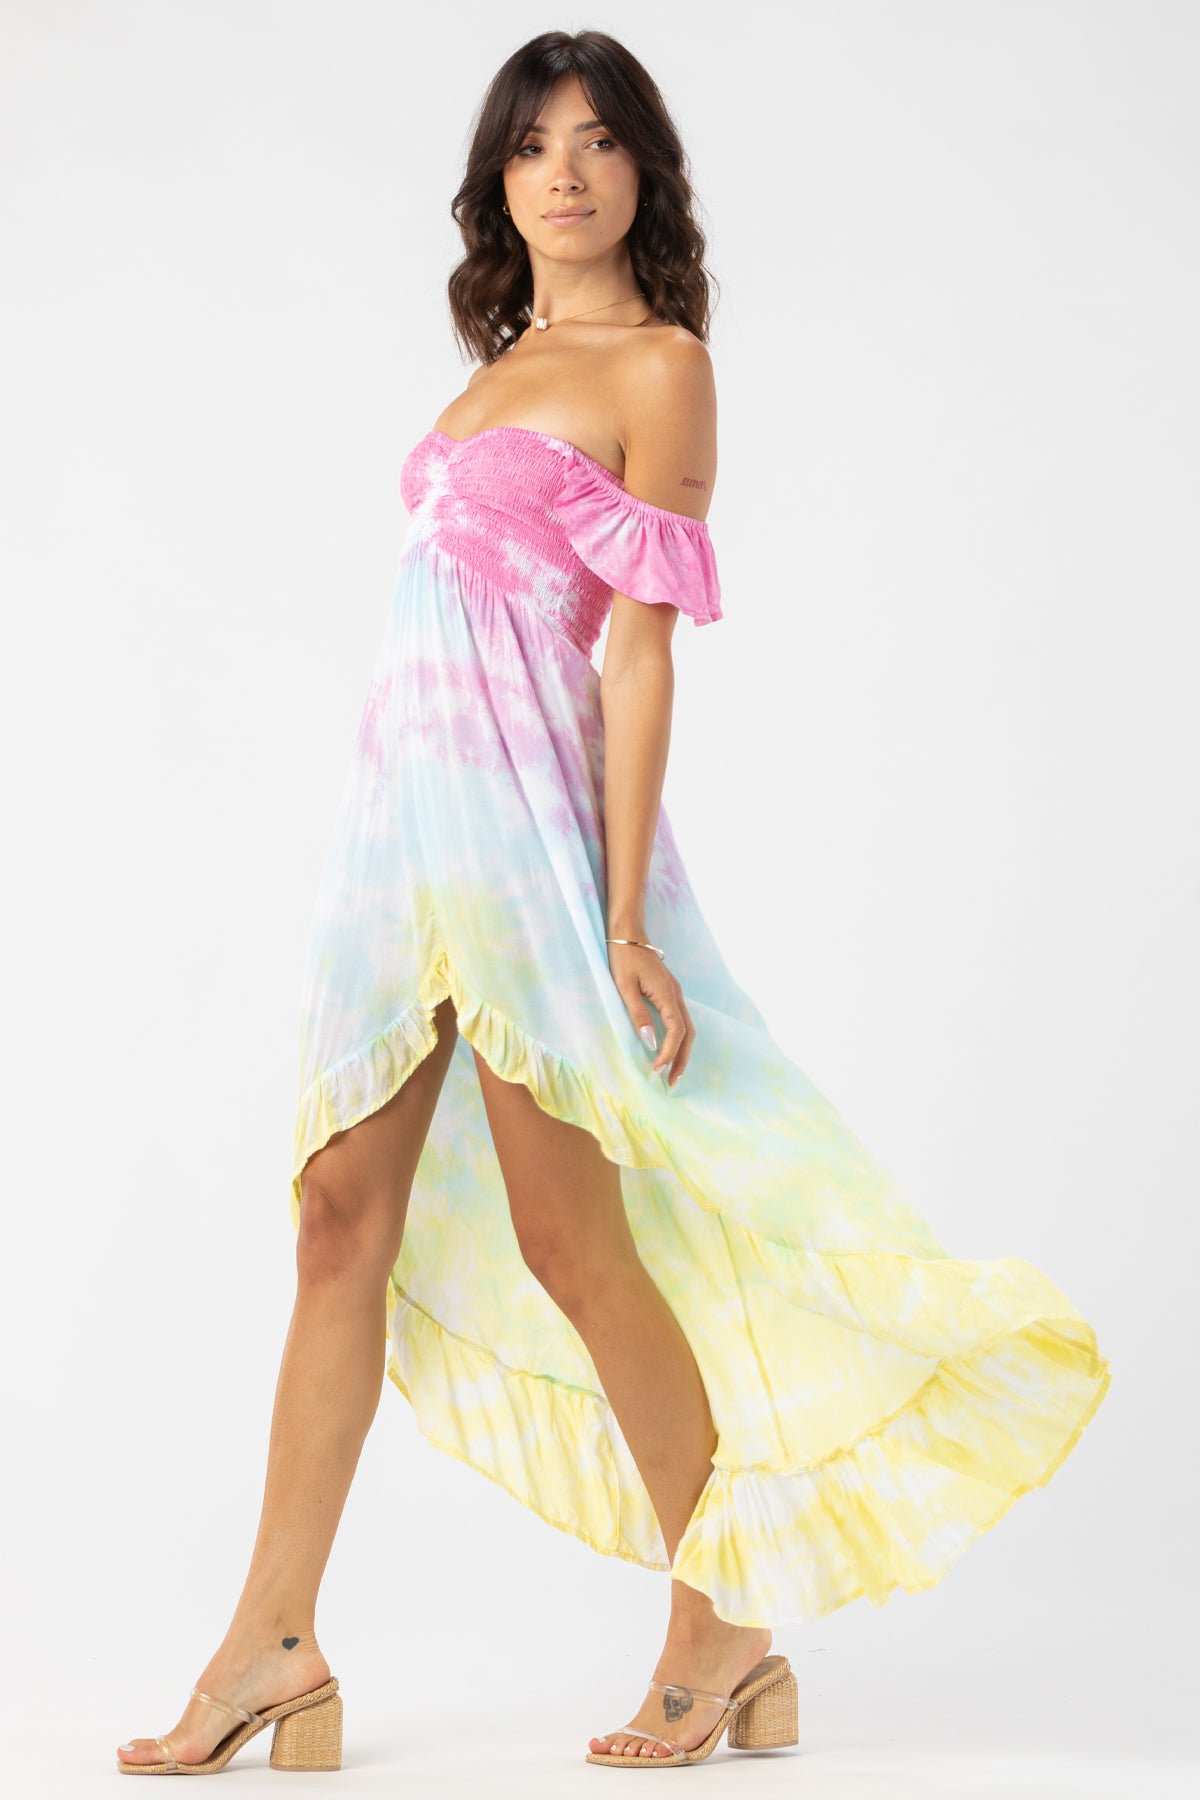 Tiare Hawaii Brooklyn Maxi Dress - Pink Aqua Yellow